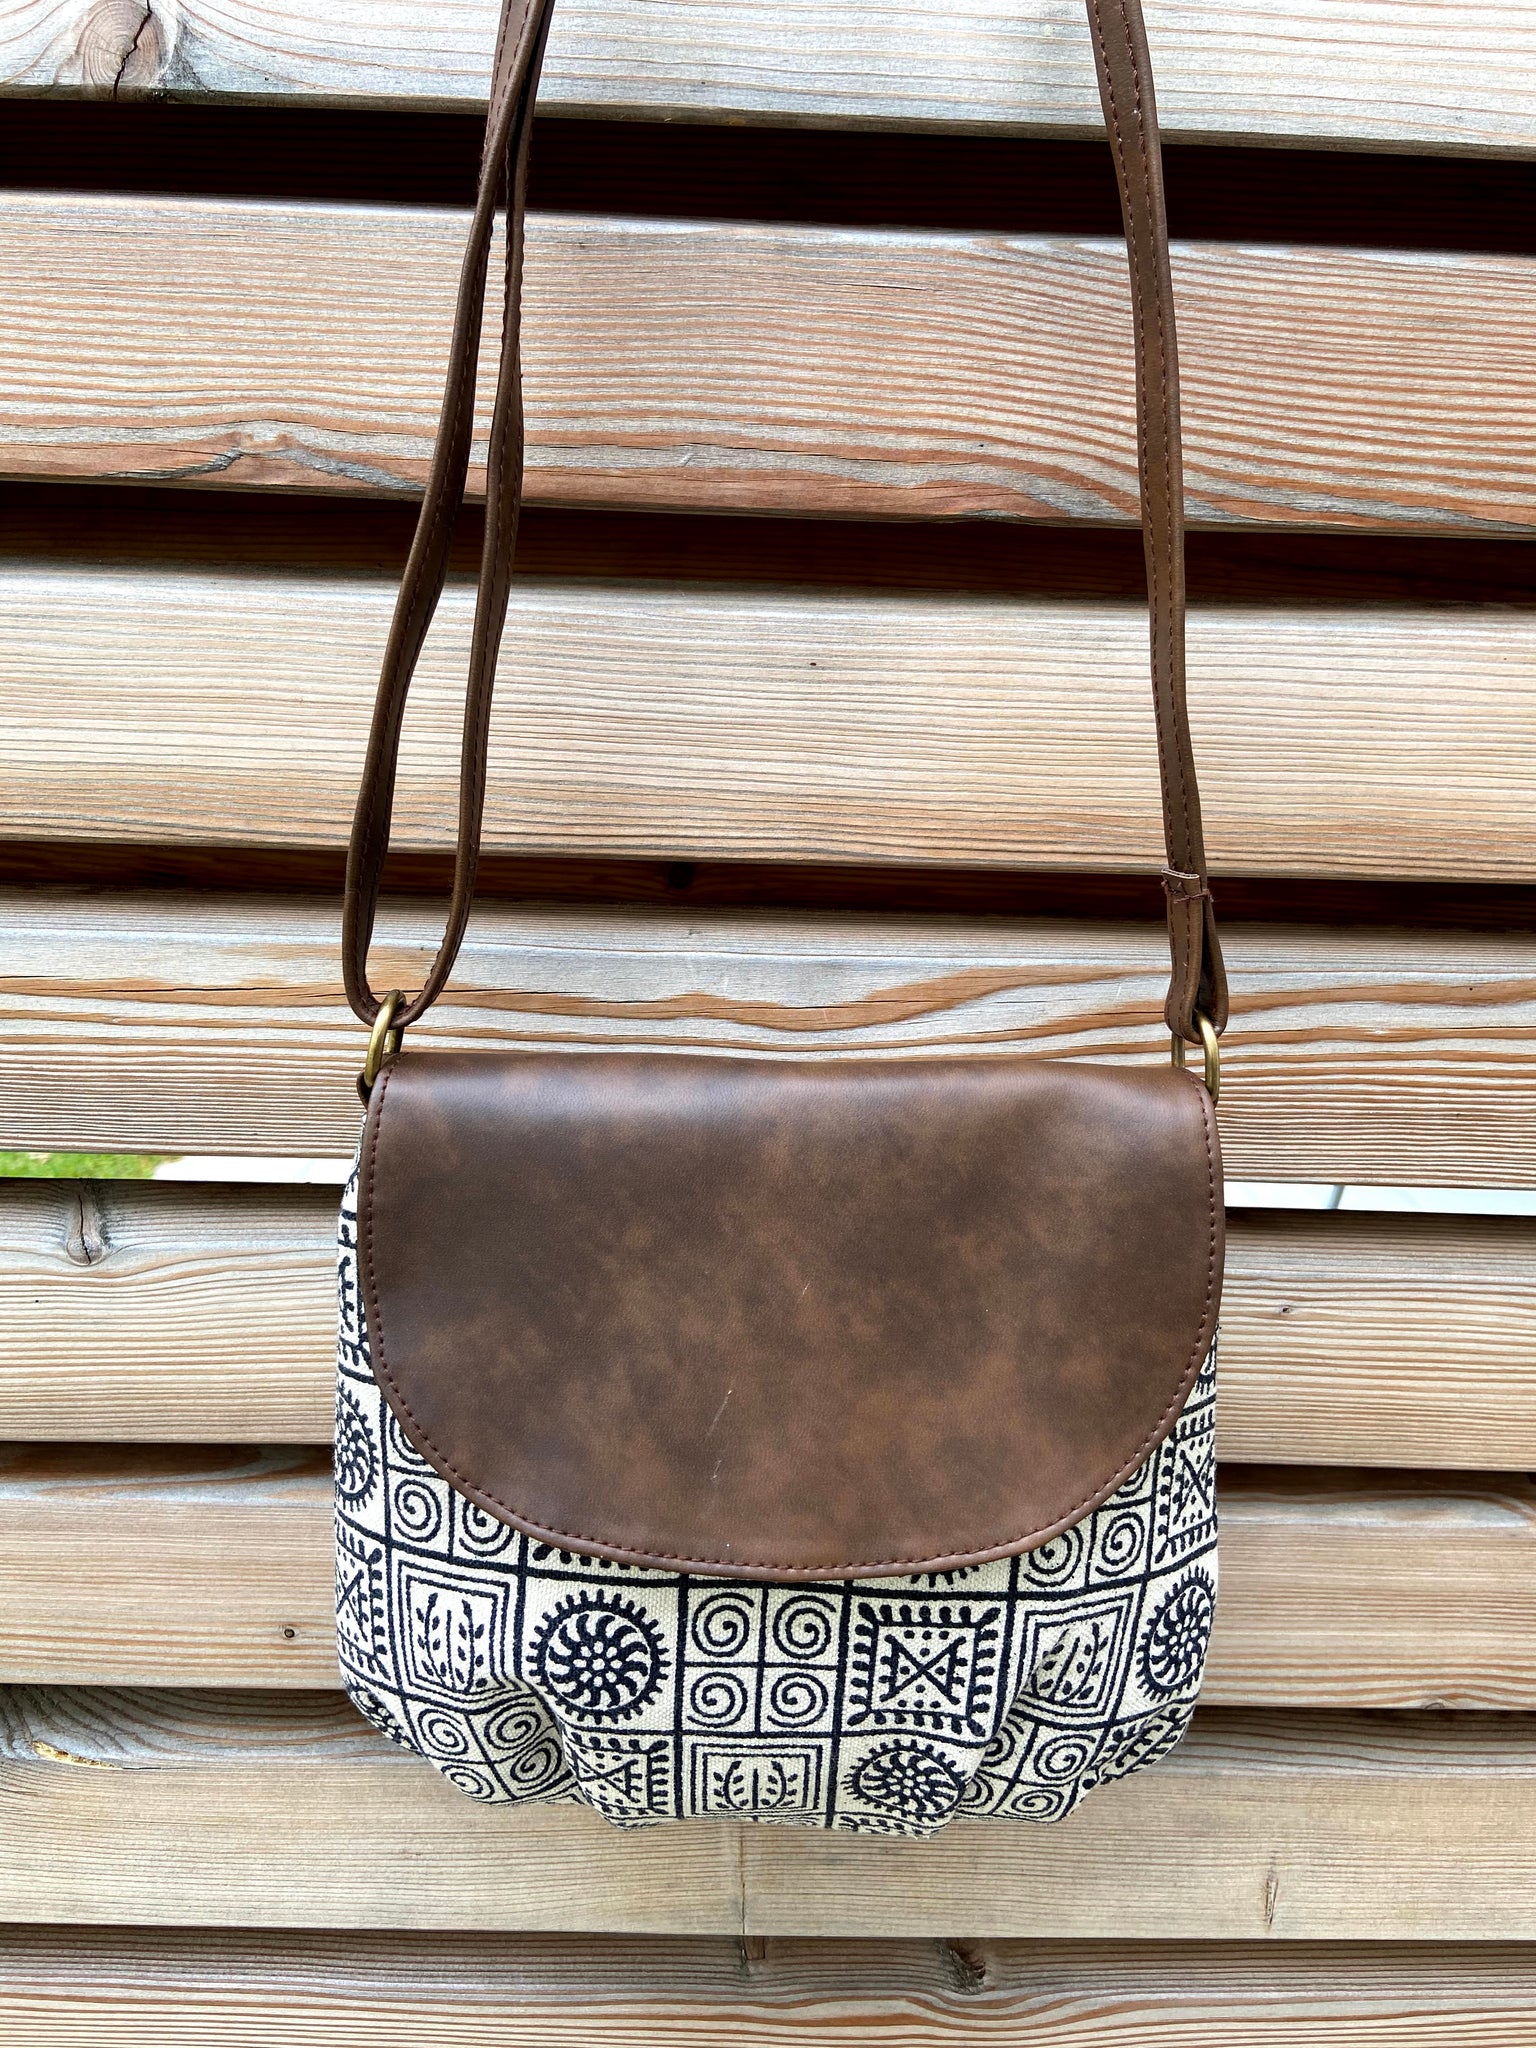 piccolino flap crossbody handbag in mandala pattern